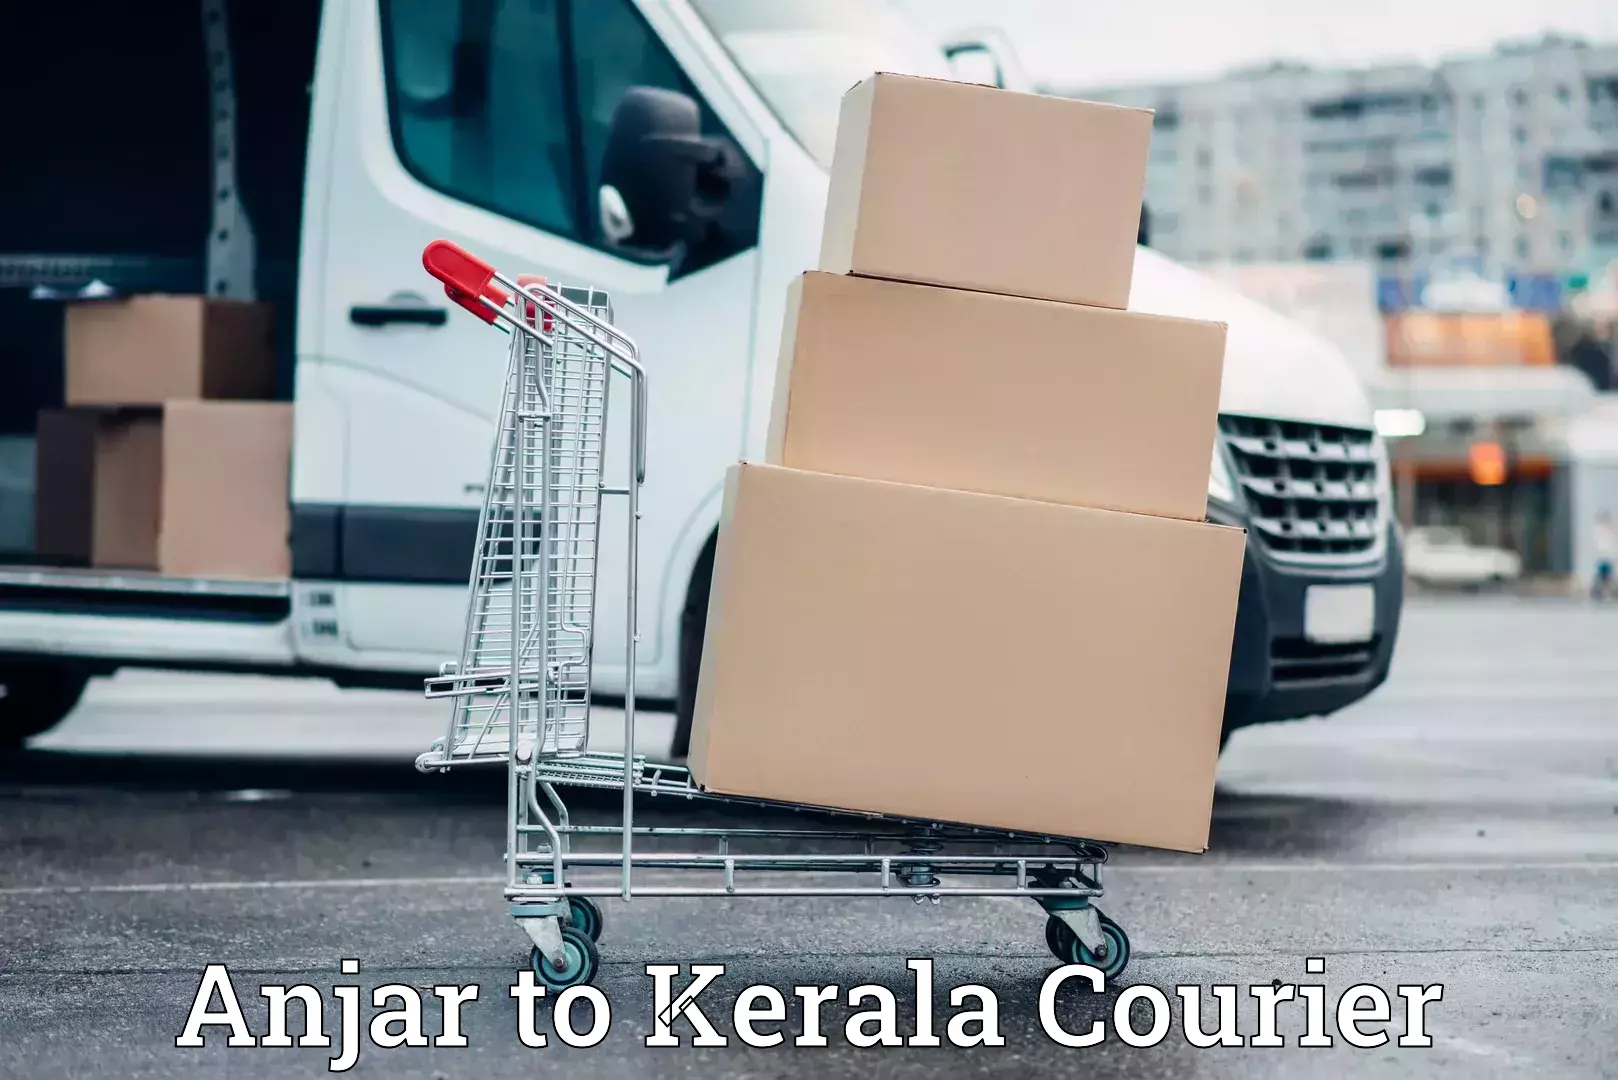 Full-service movers Anjar to Kerala